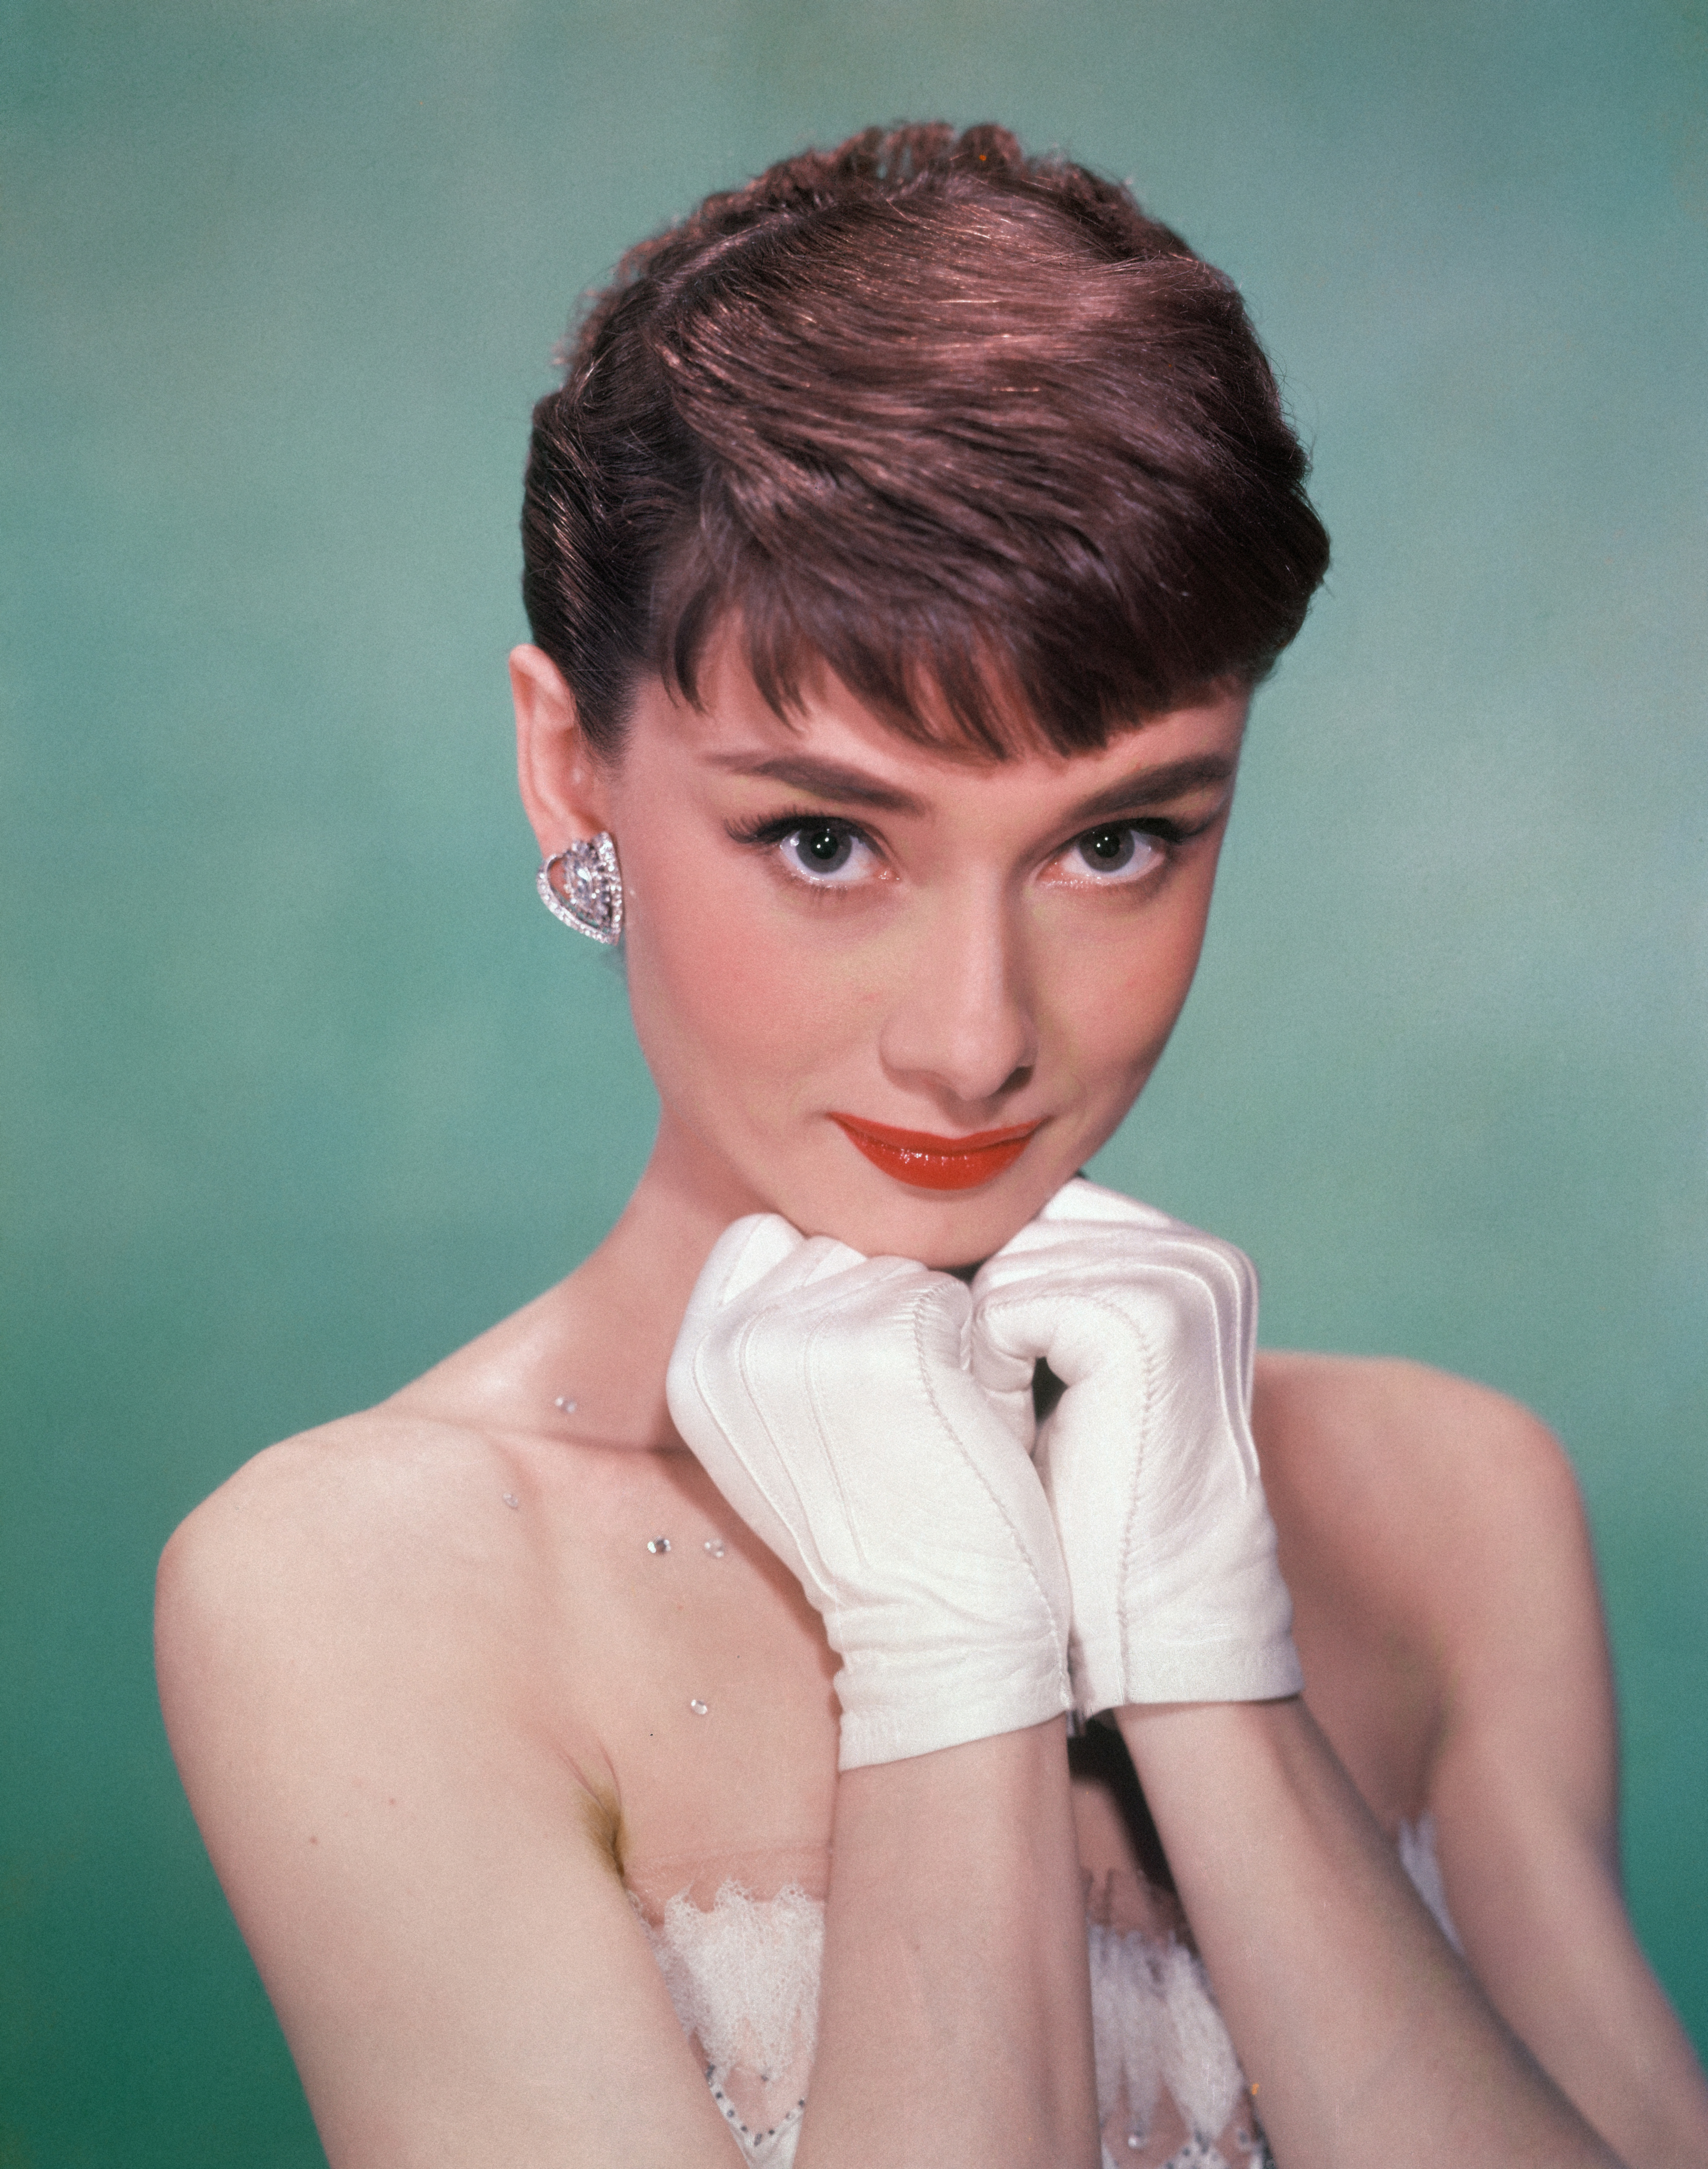 Audrey Hepburn, ca. 1950er Jahre | Quelle: Getty Images